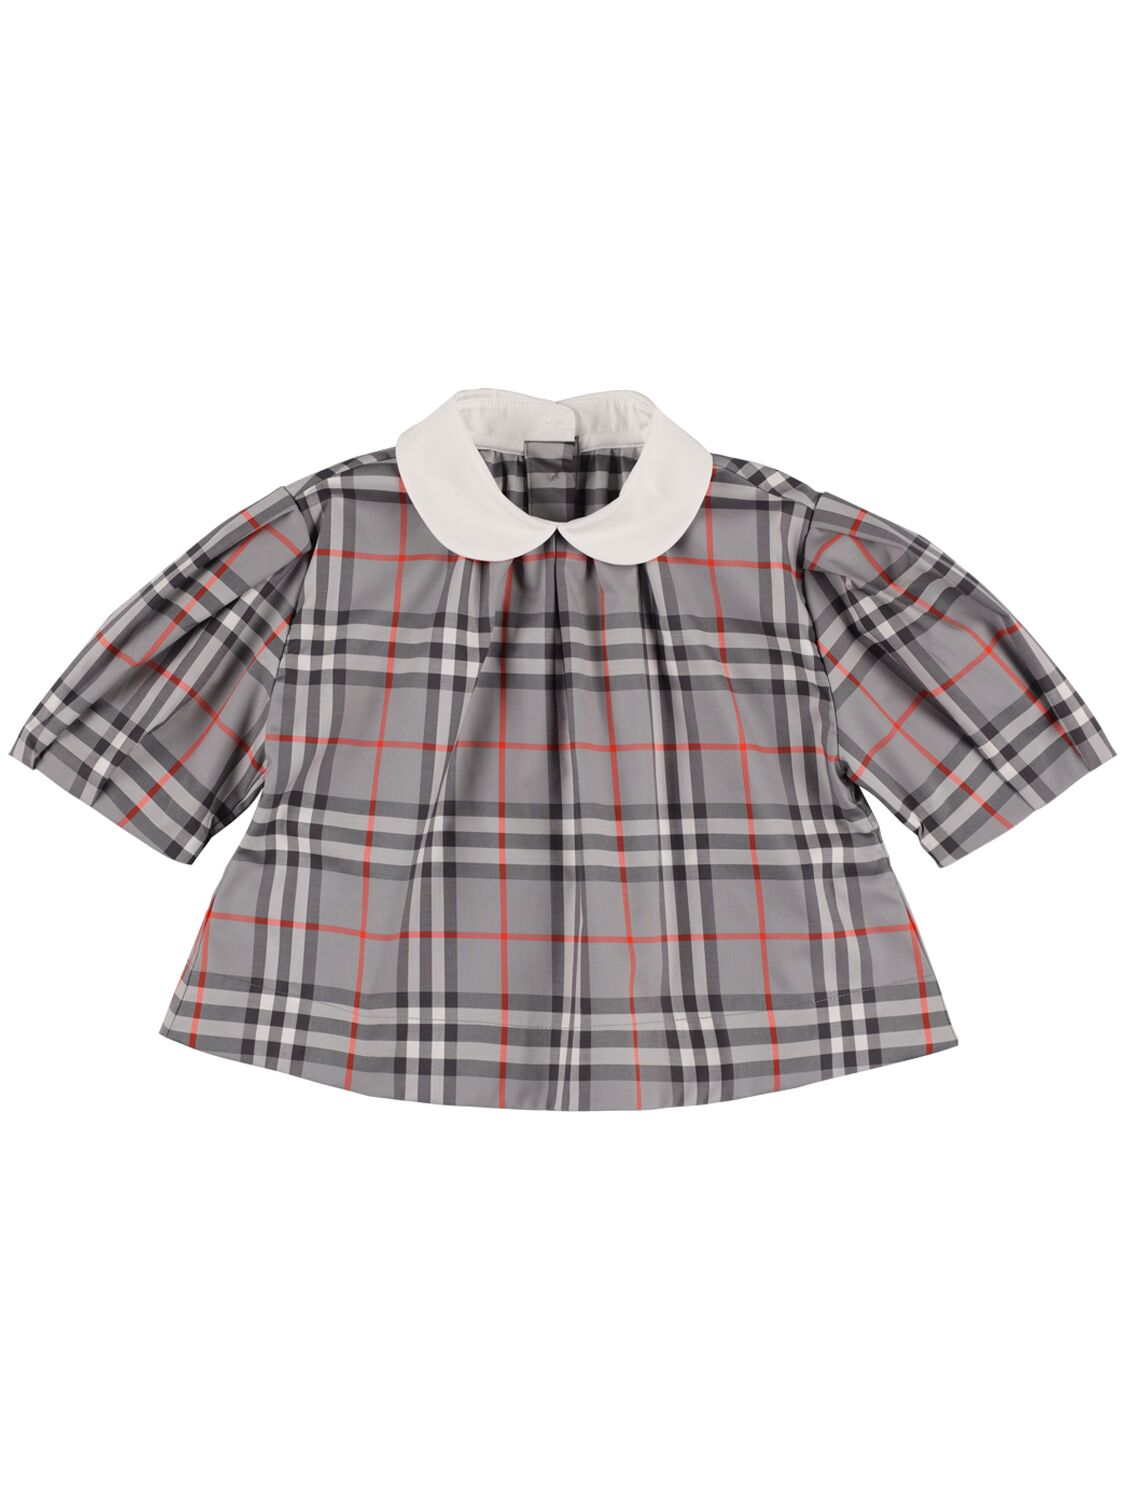 Burberry Kids' Check Print Cotton Blend Poplin Shirt